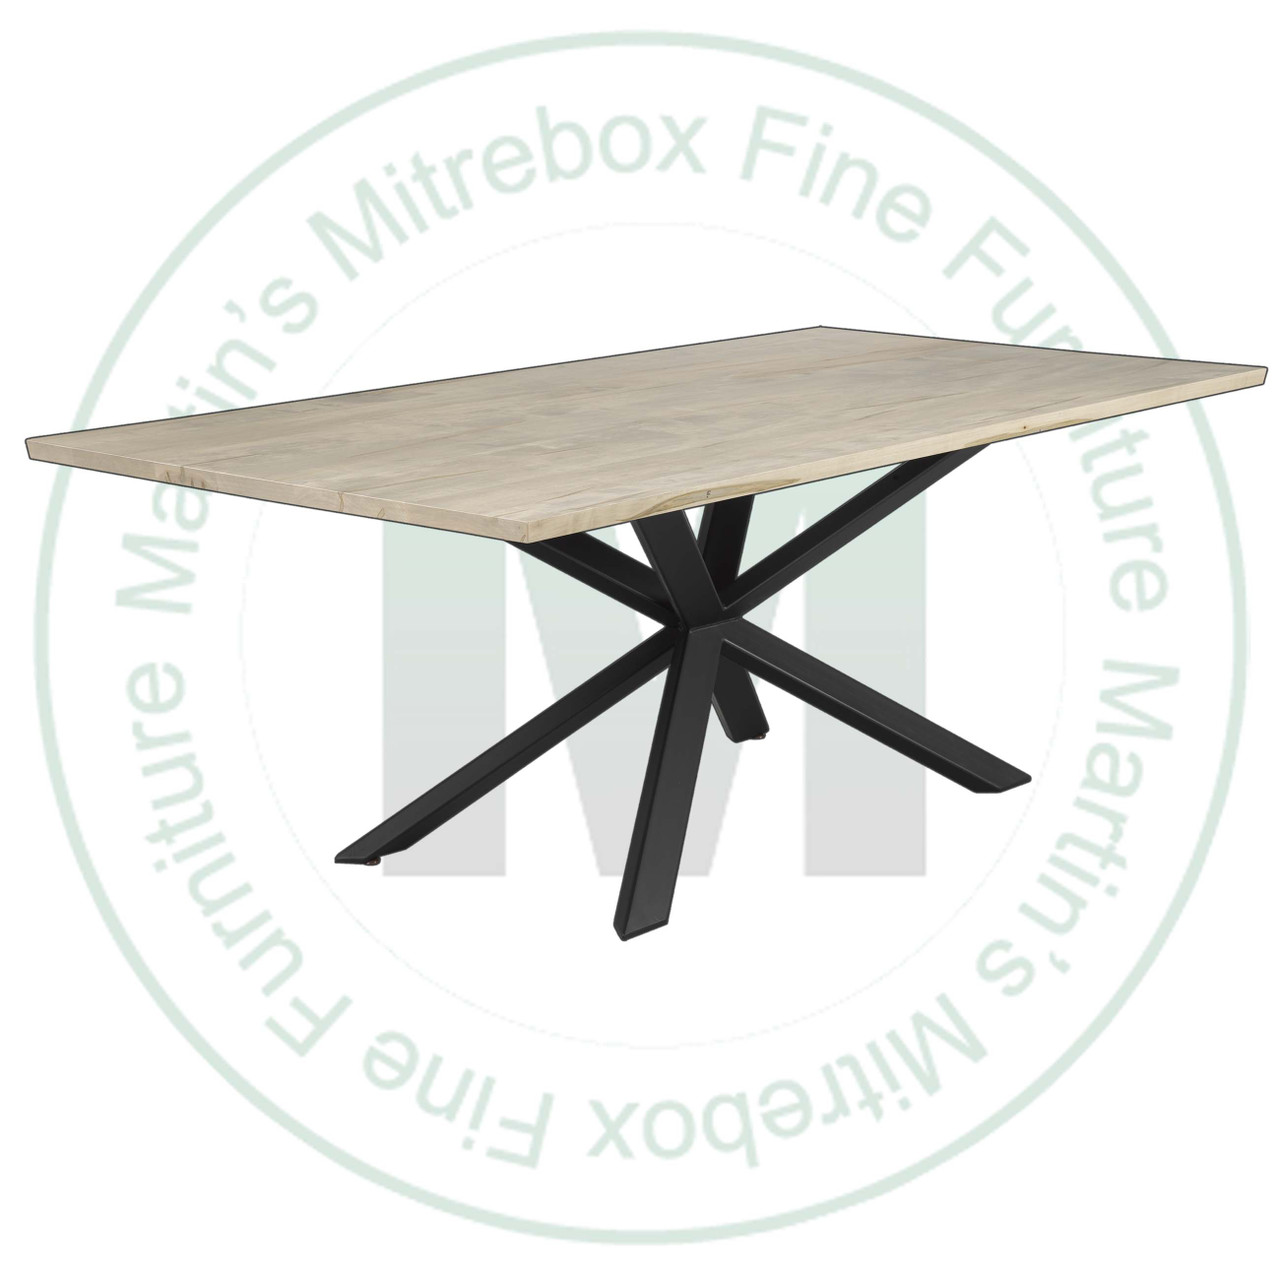 Oak Norseman Solid Top Double Pedestal Table 48''D x 72''W x 30''H Has 2 - 16'' Extensions